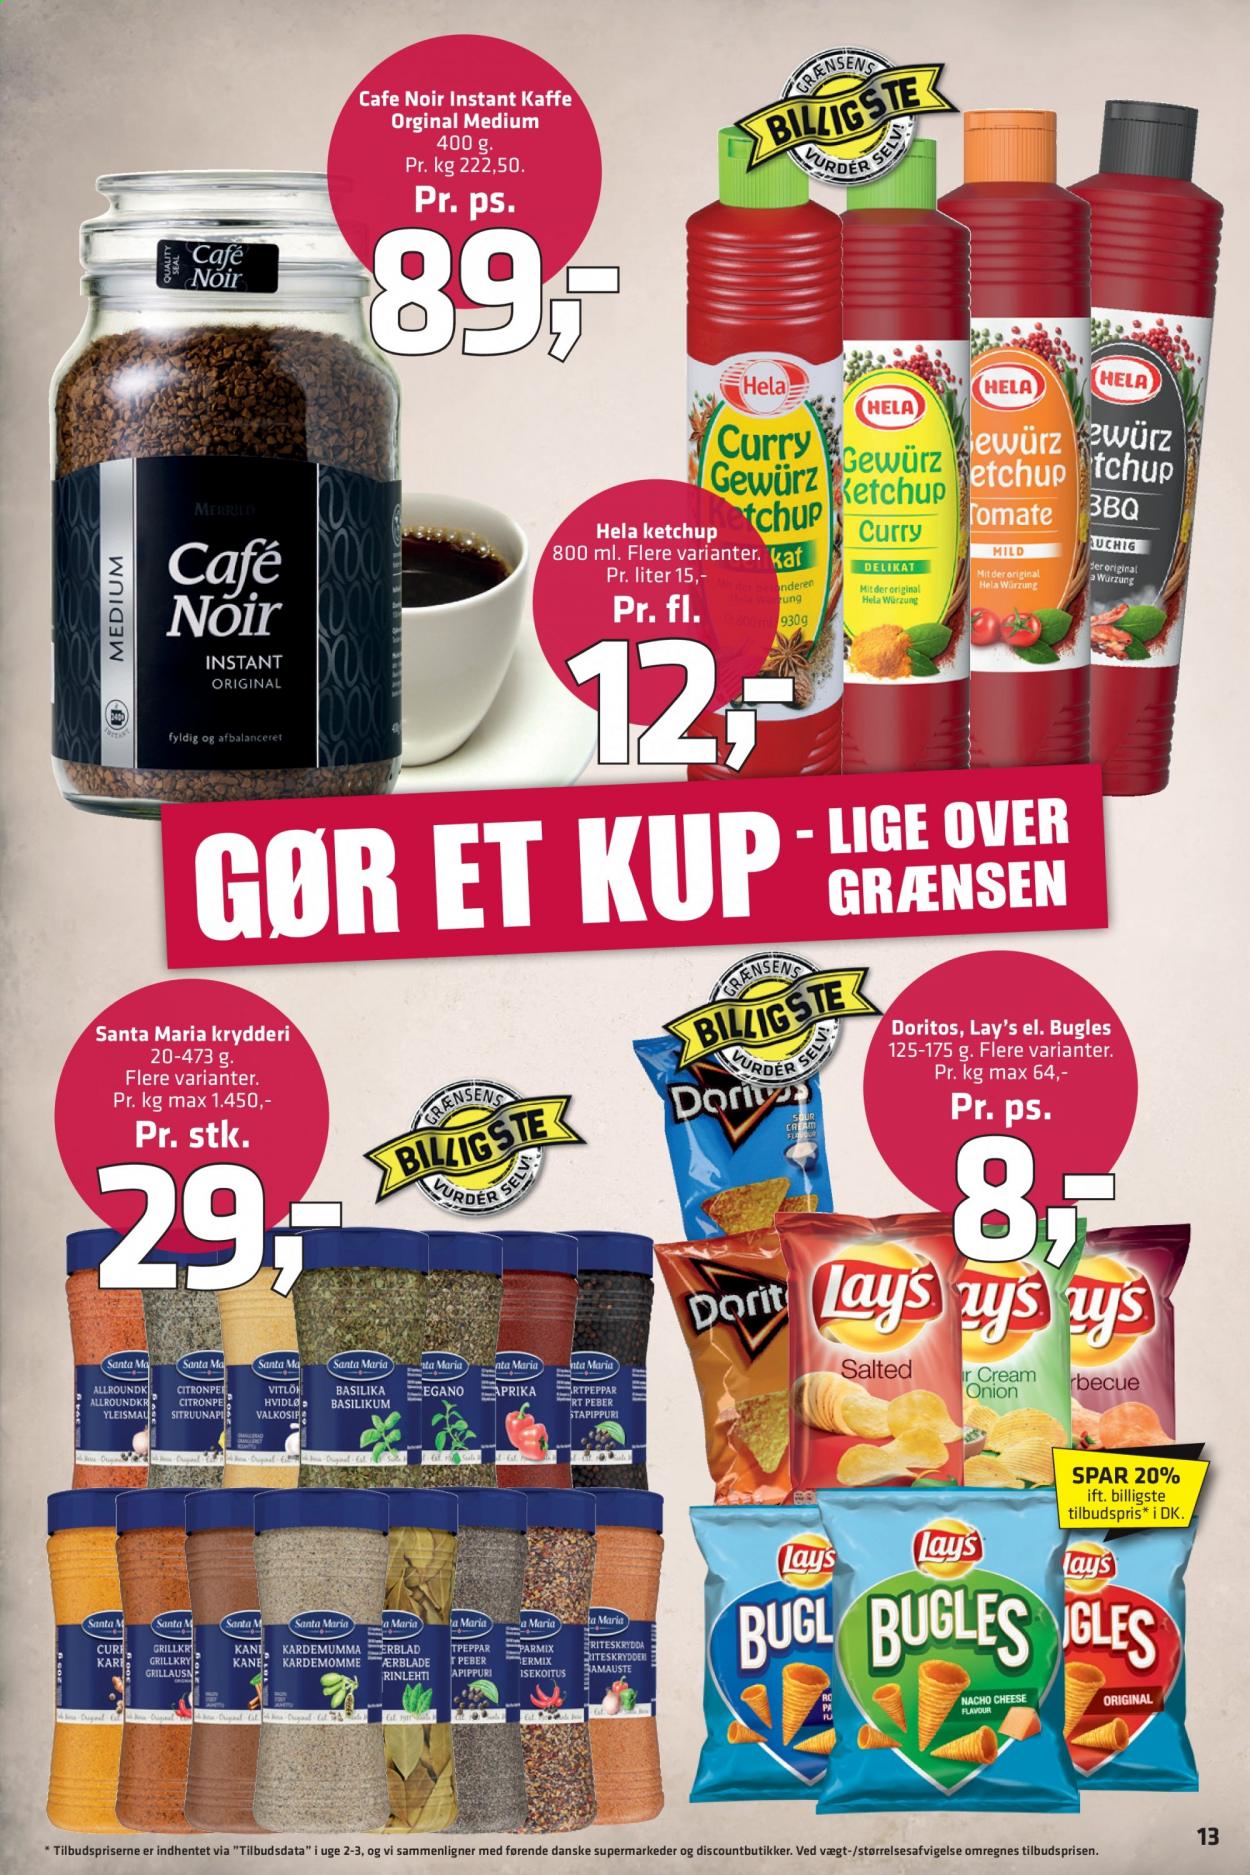 thumbnail - Fleggaard tilbud  - 24.2.2021 - 9.3.2021 - tilbudsprodukter - Doritos, basilikum, instant kaffe, kaffe, Cafe Noir. Side 16.